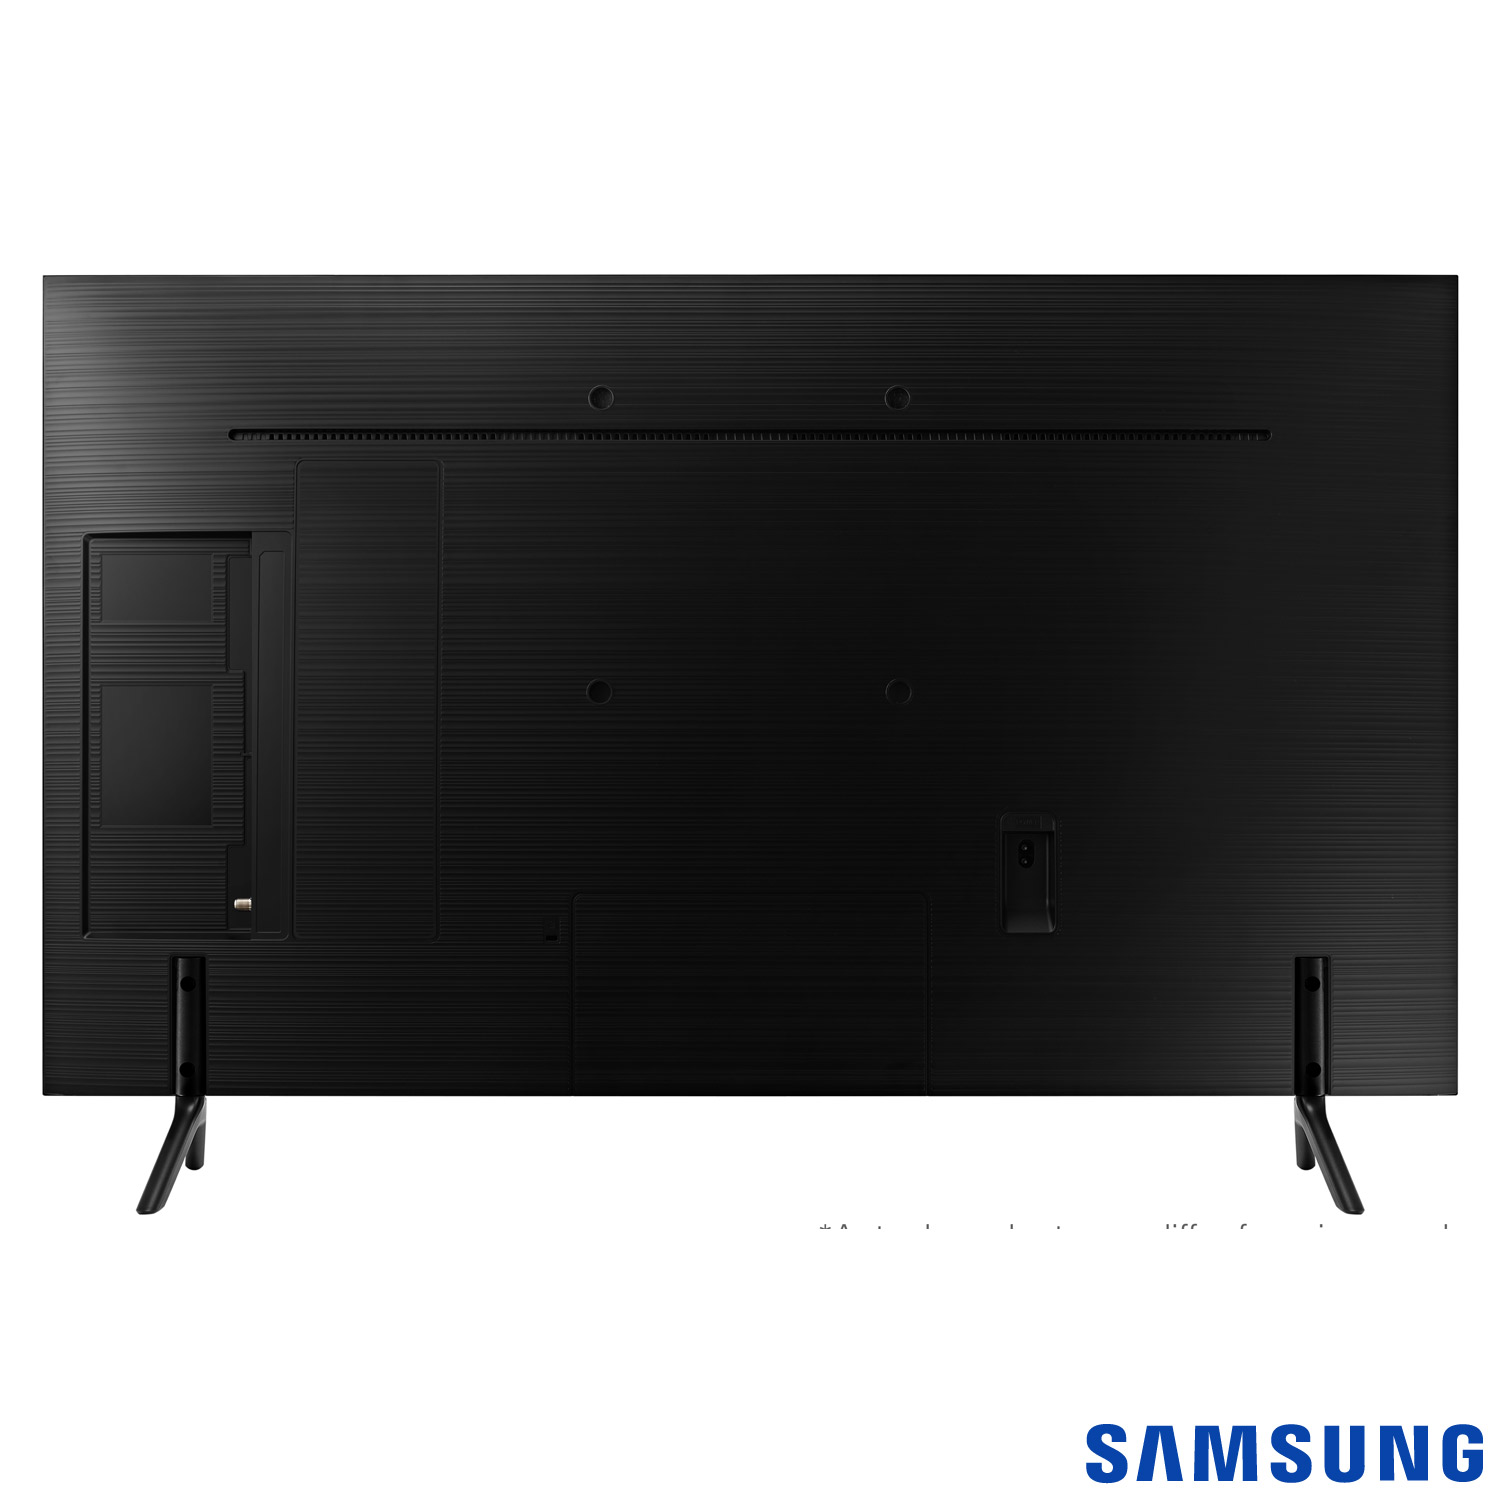 Smart TV 4K Samsung LED 2018 UHD 50", Sol...